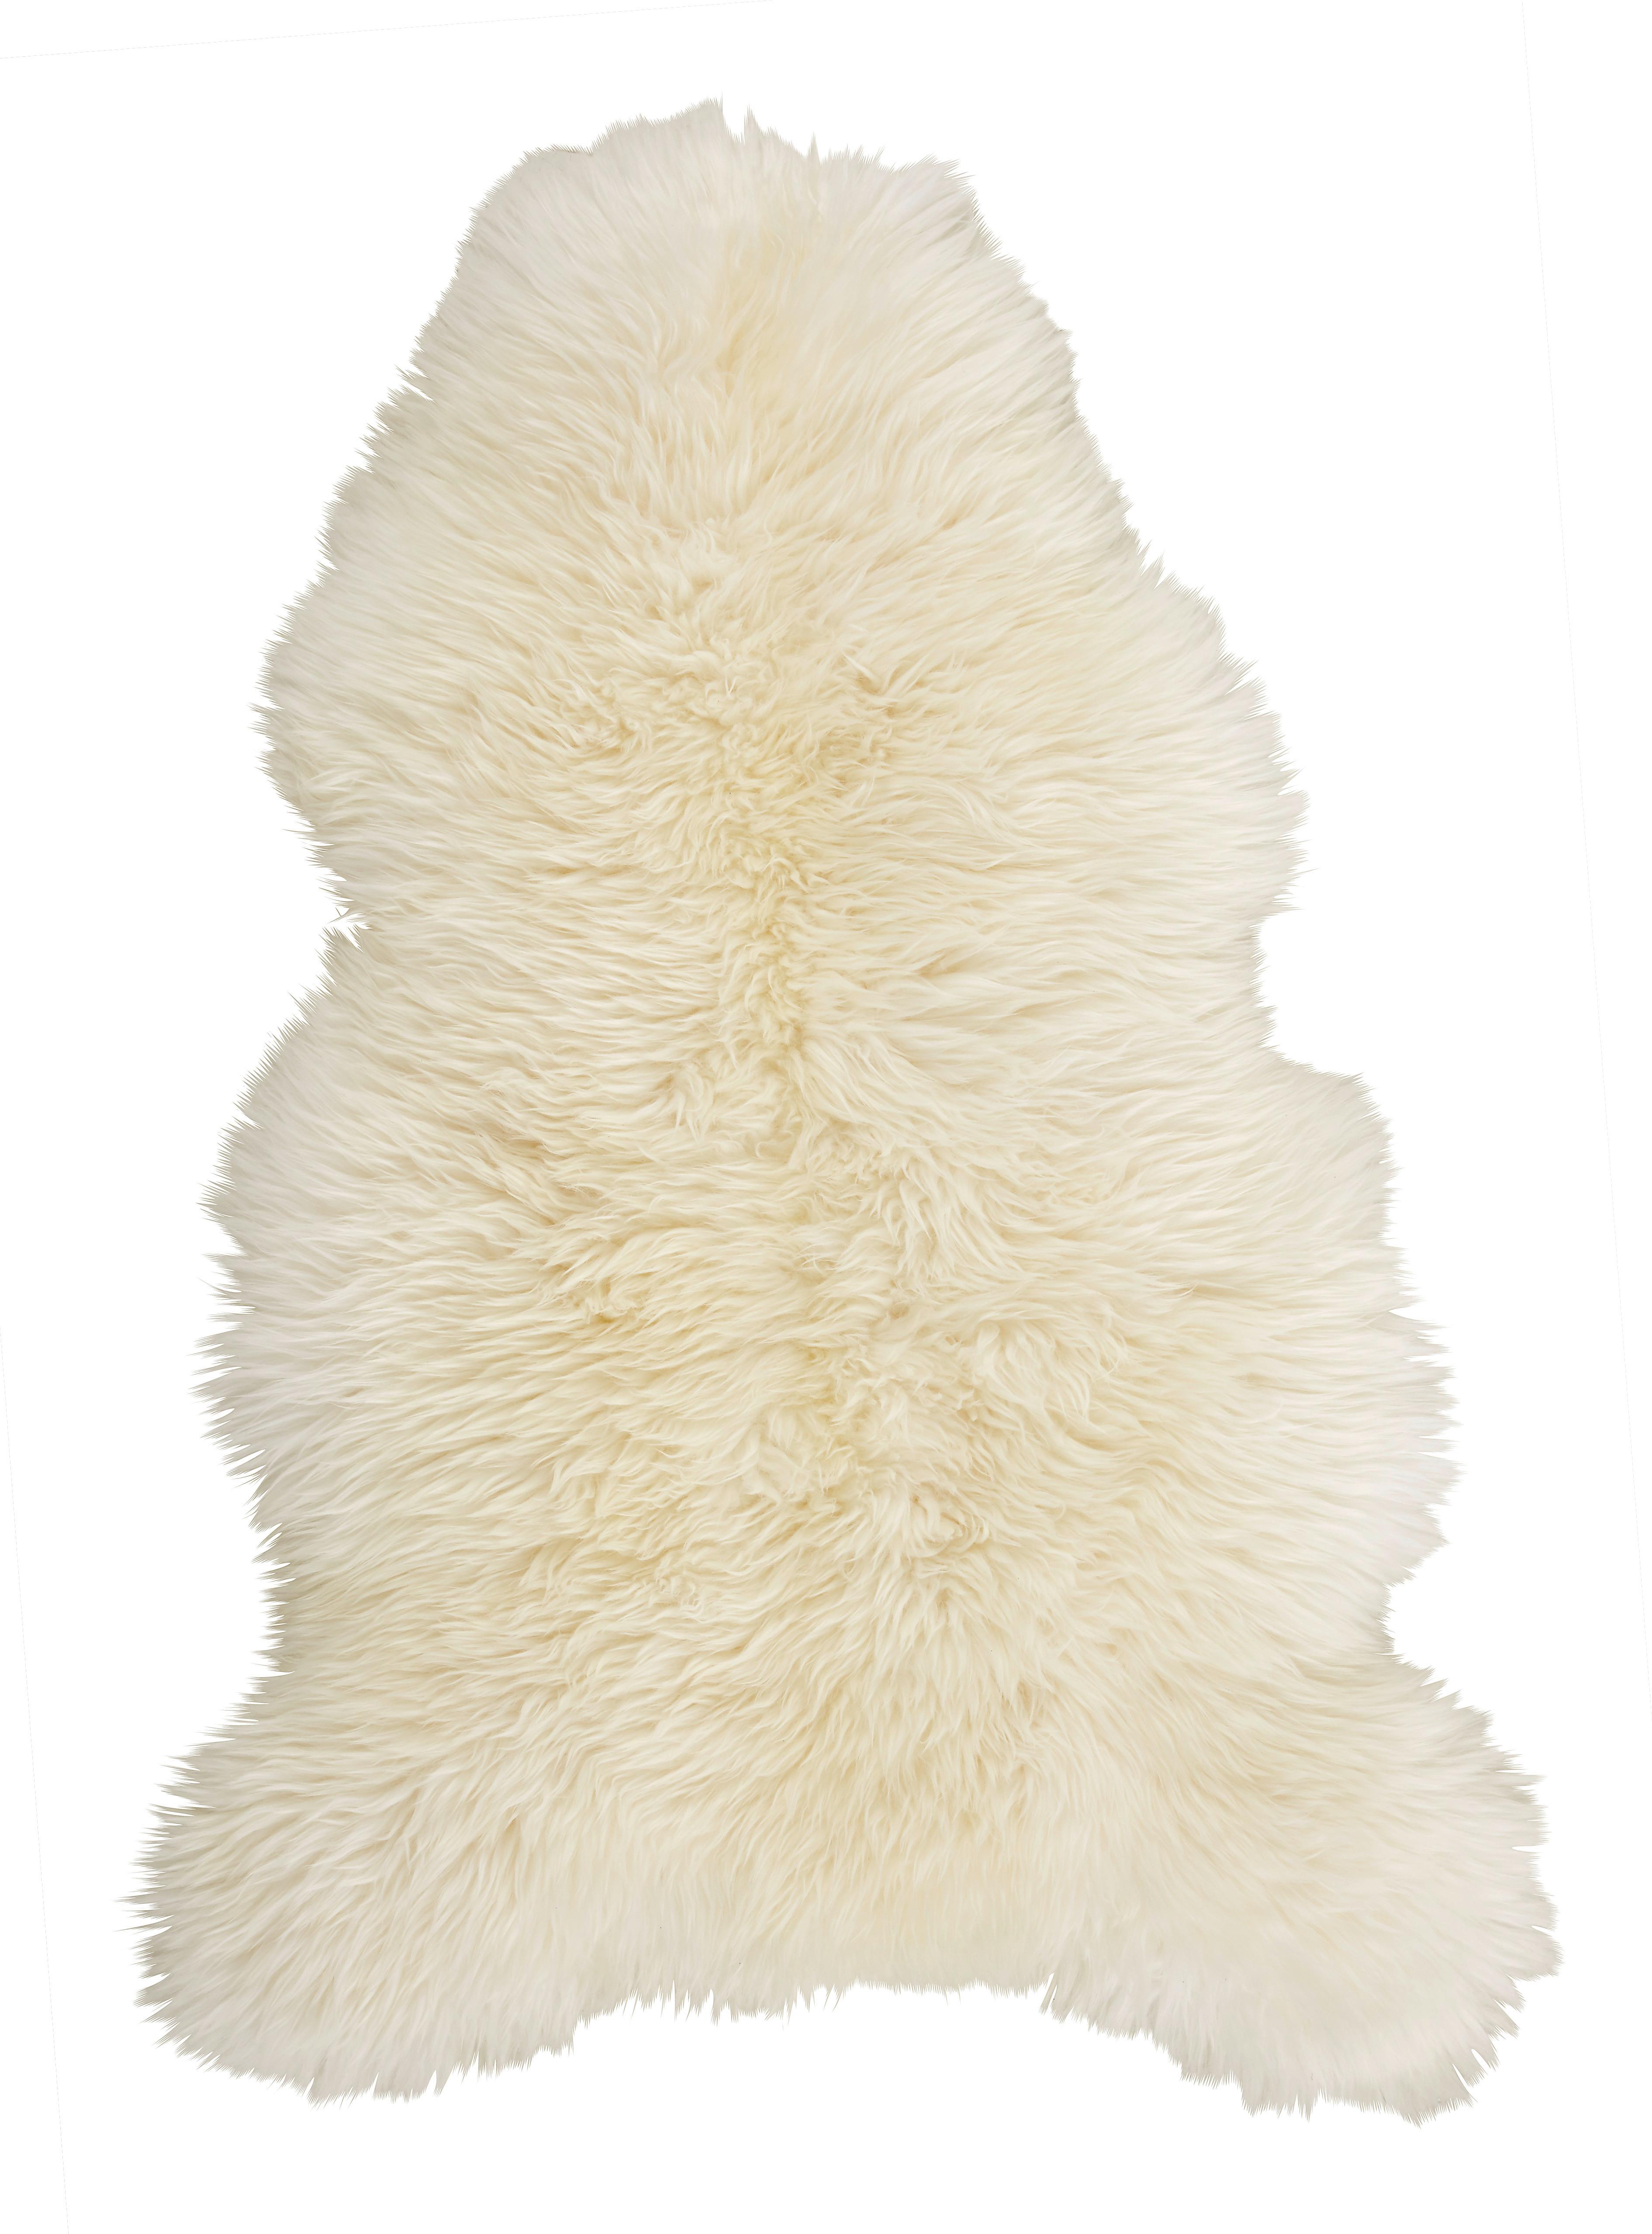 Ovčia Kožušina Jenny, 90-105/60cm, Biela - biela, kožušina (90-105/60cm) - Modern Living